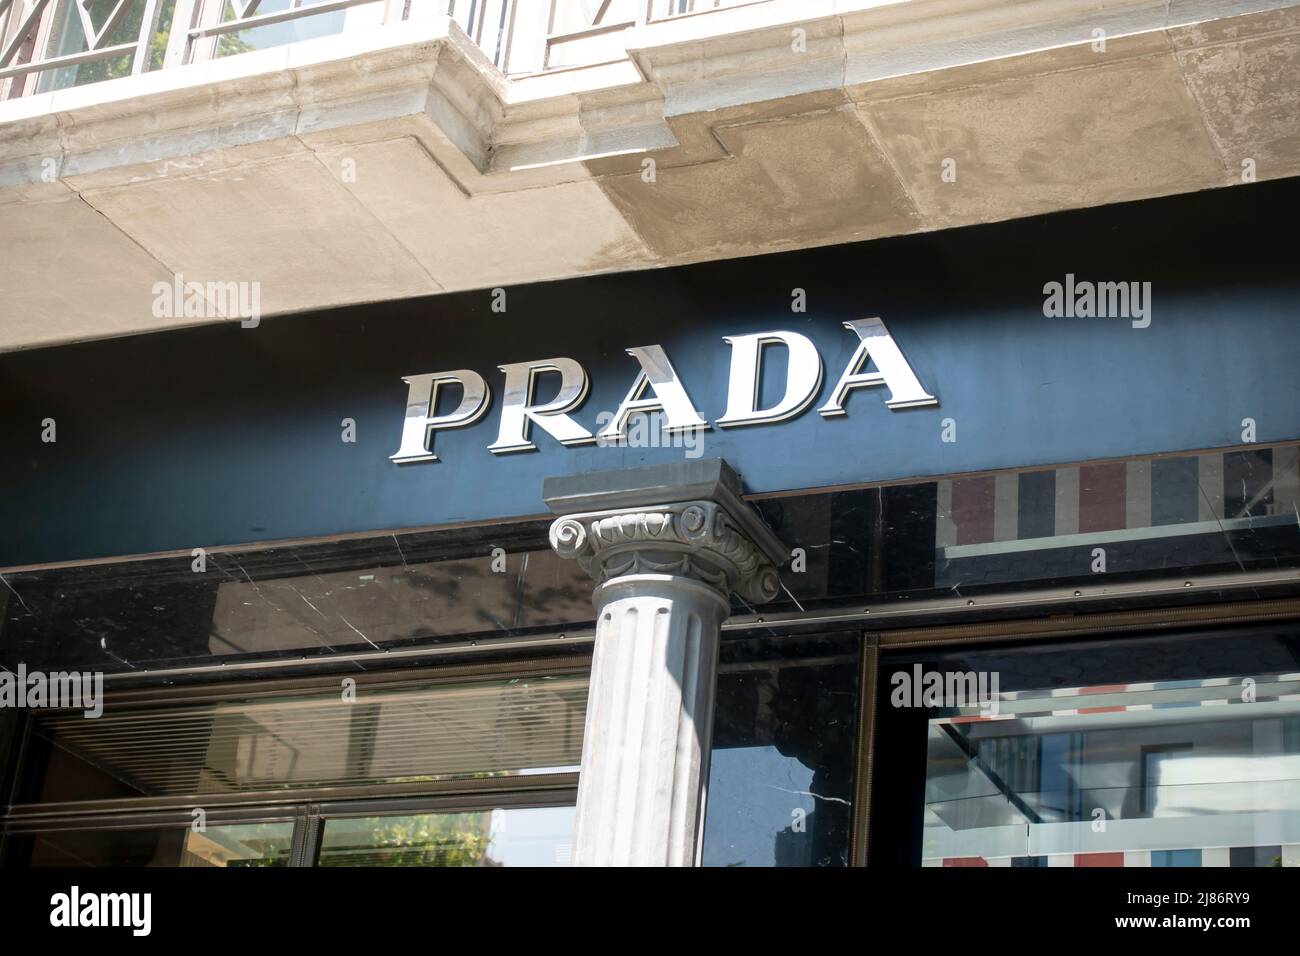 Barcelona, Spain - May 9, 2022: Prada store sign. Prada is an Italian luxury fashion house. Stock Photo